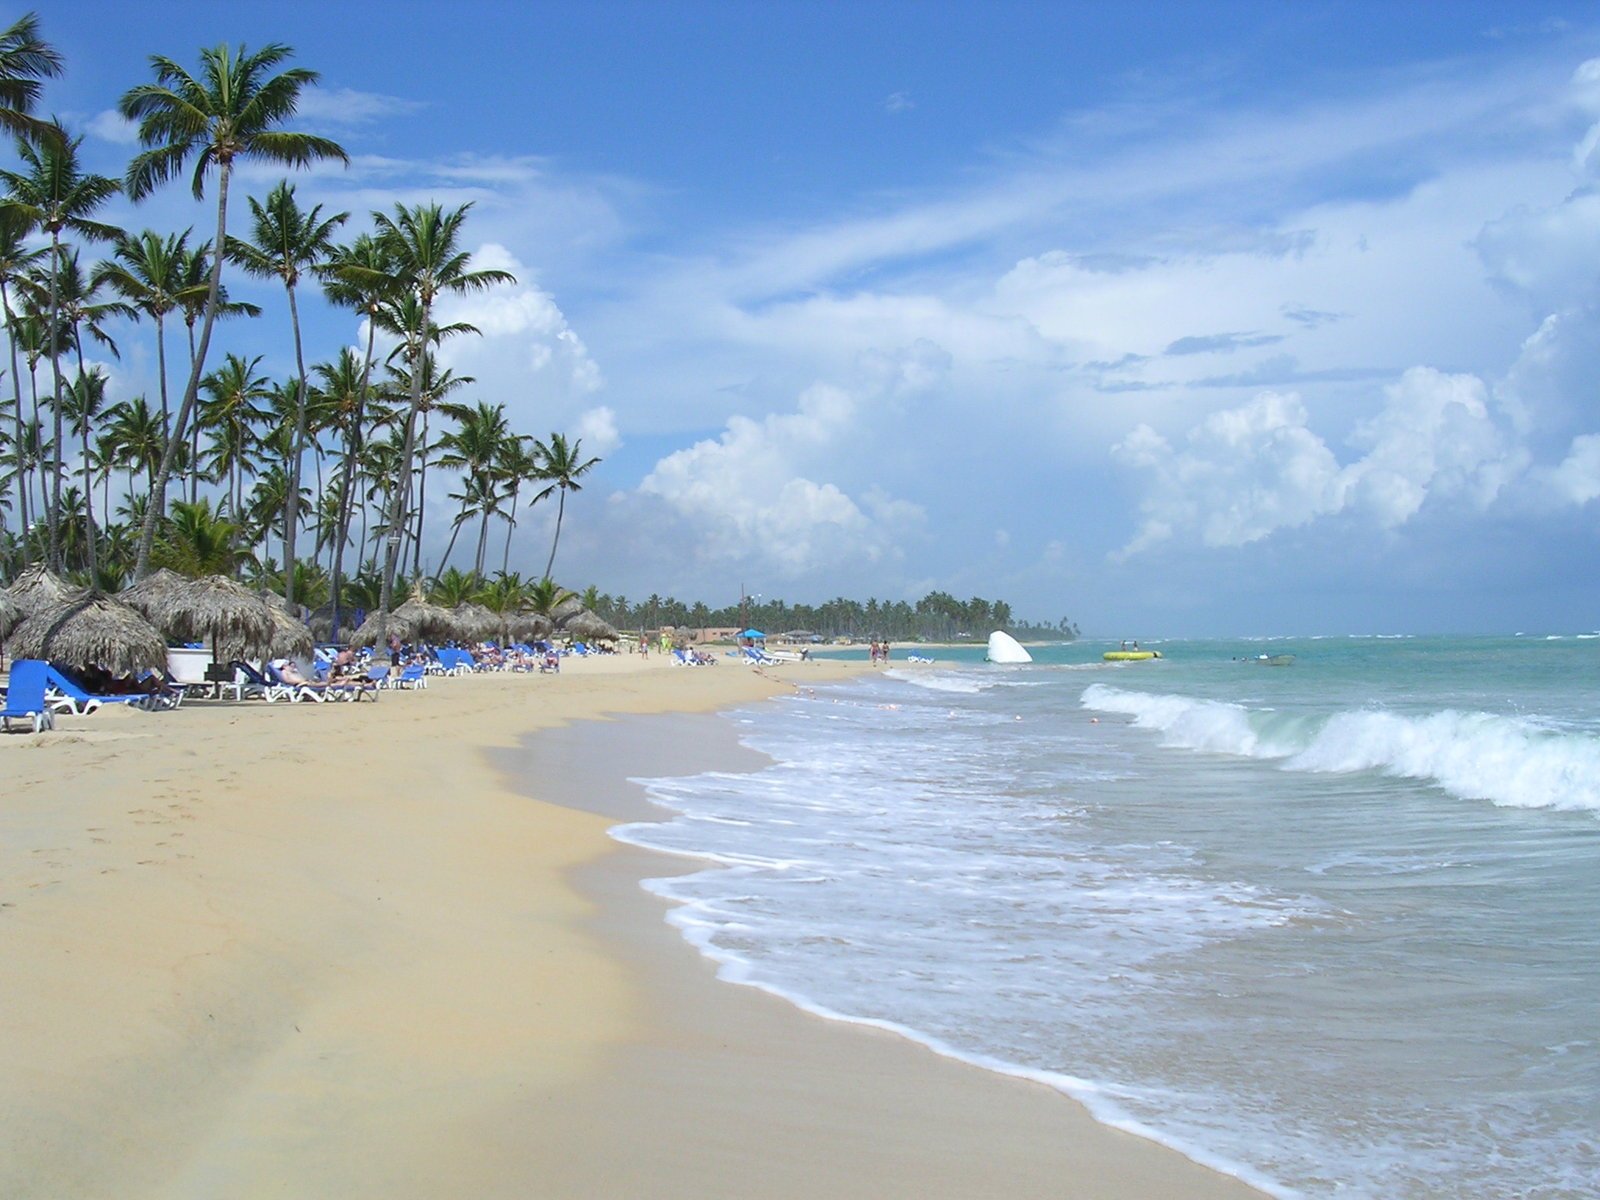 the sandy beach at tropical resort has blue umbrellas